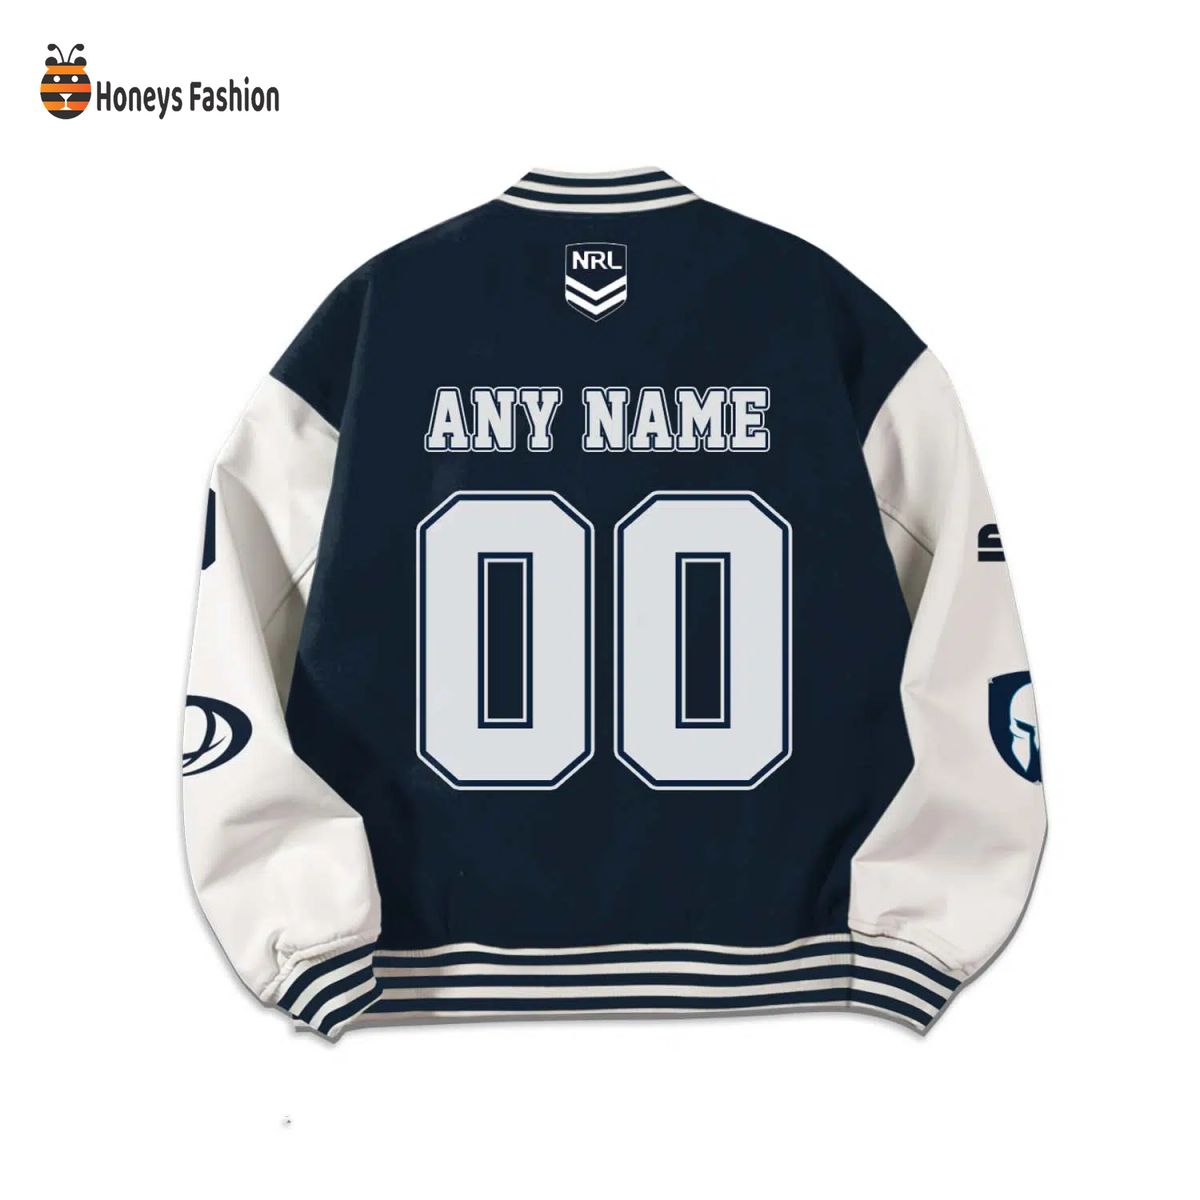 Gold Coast Titans Custom Name Rugby Baseball Jacket